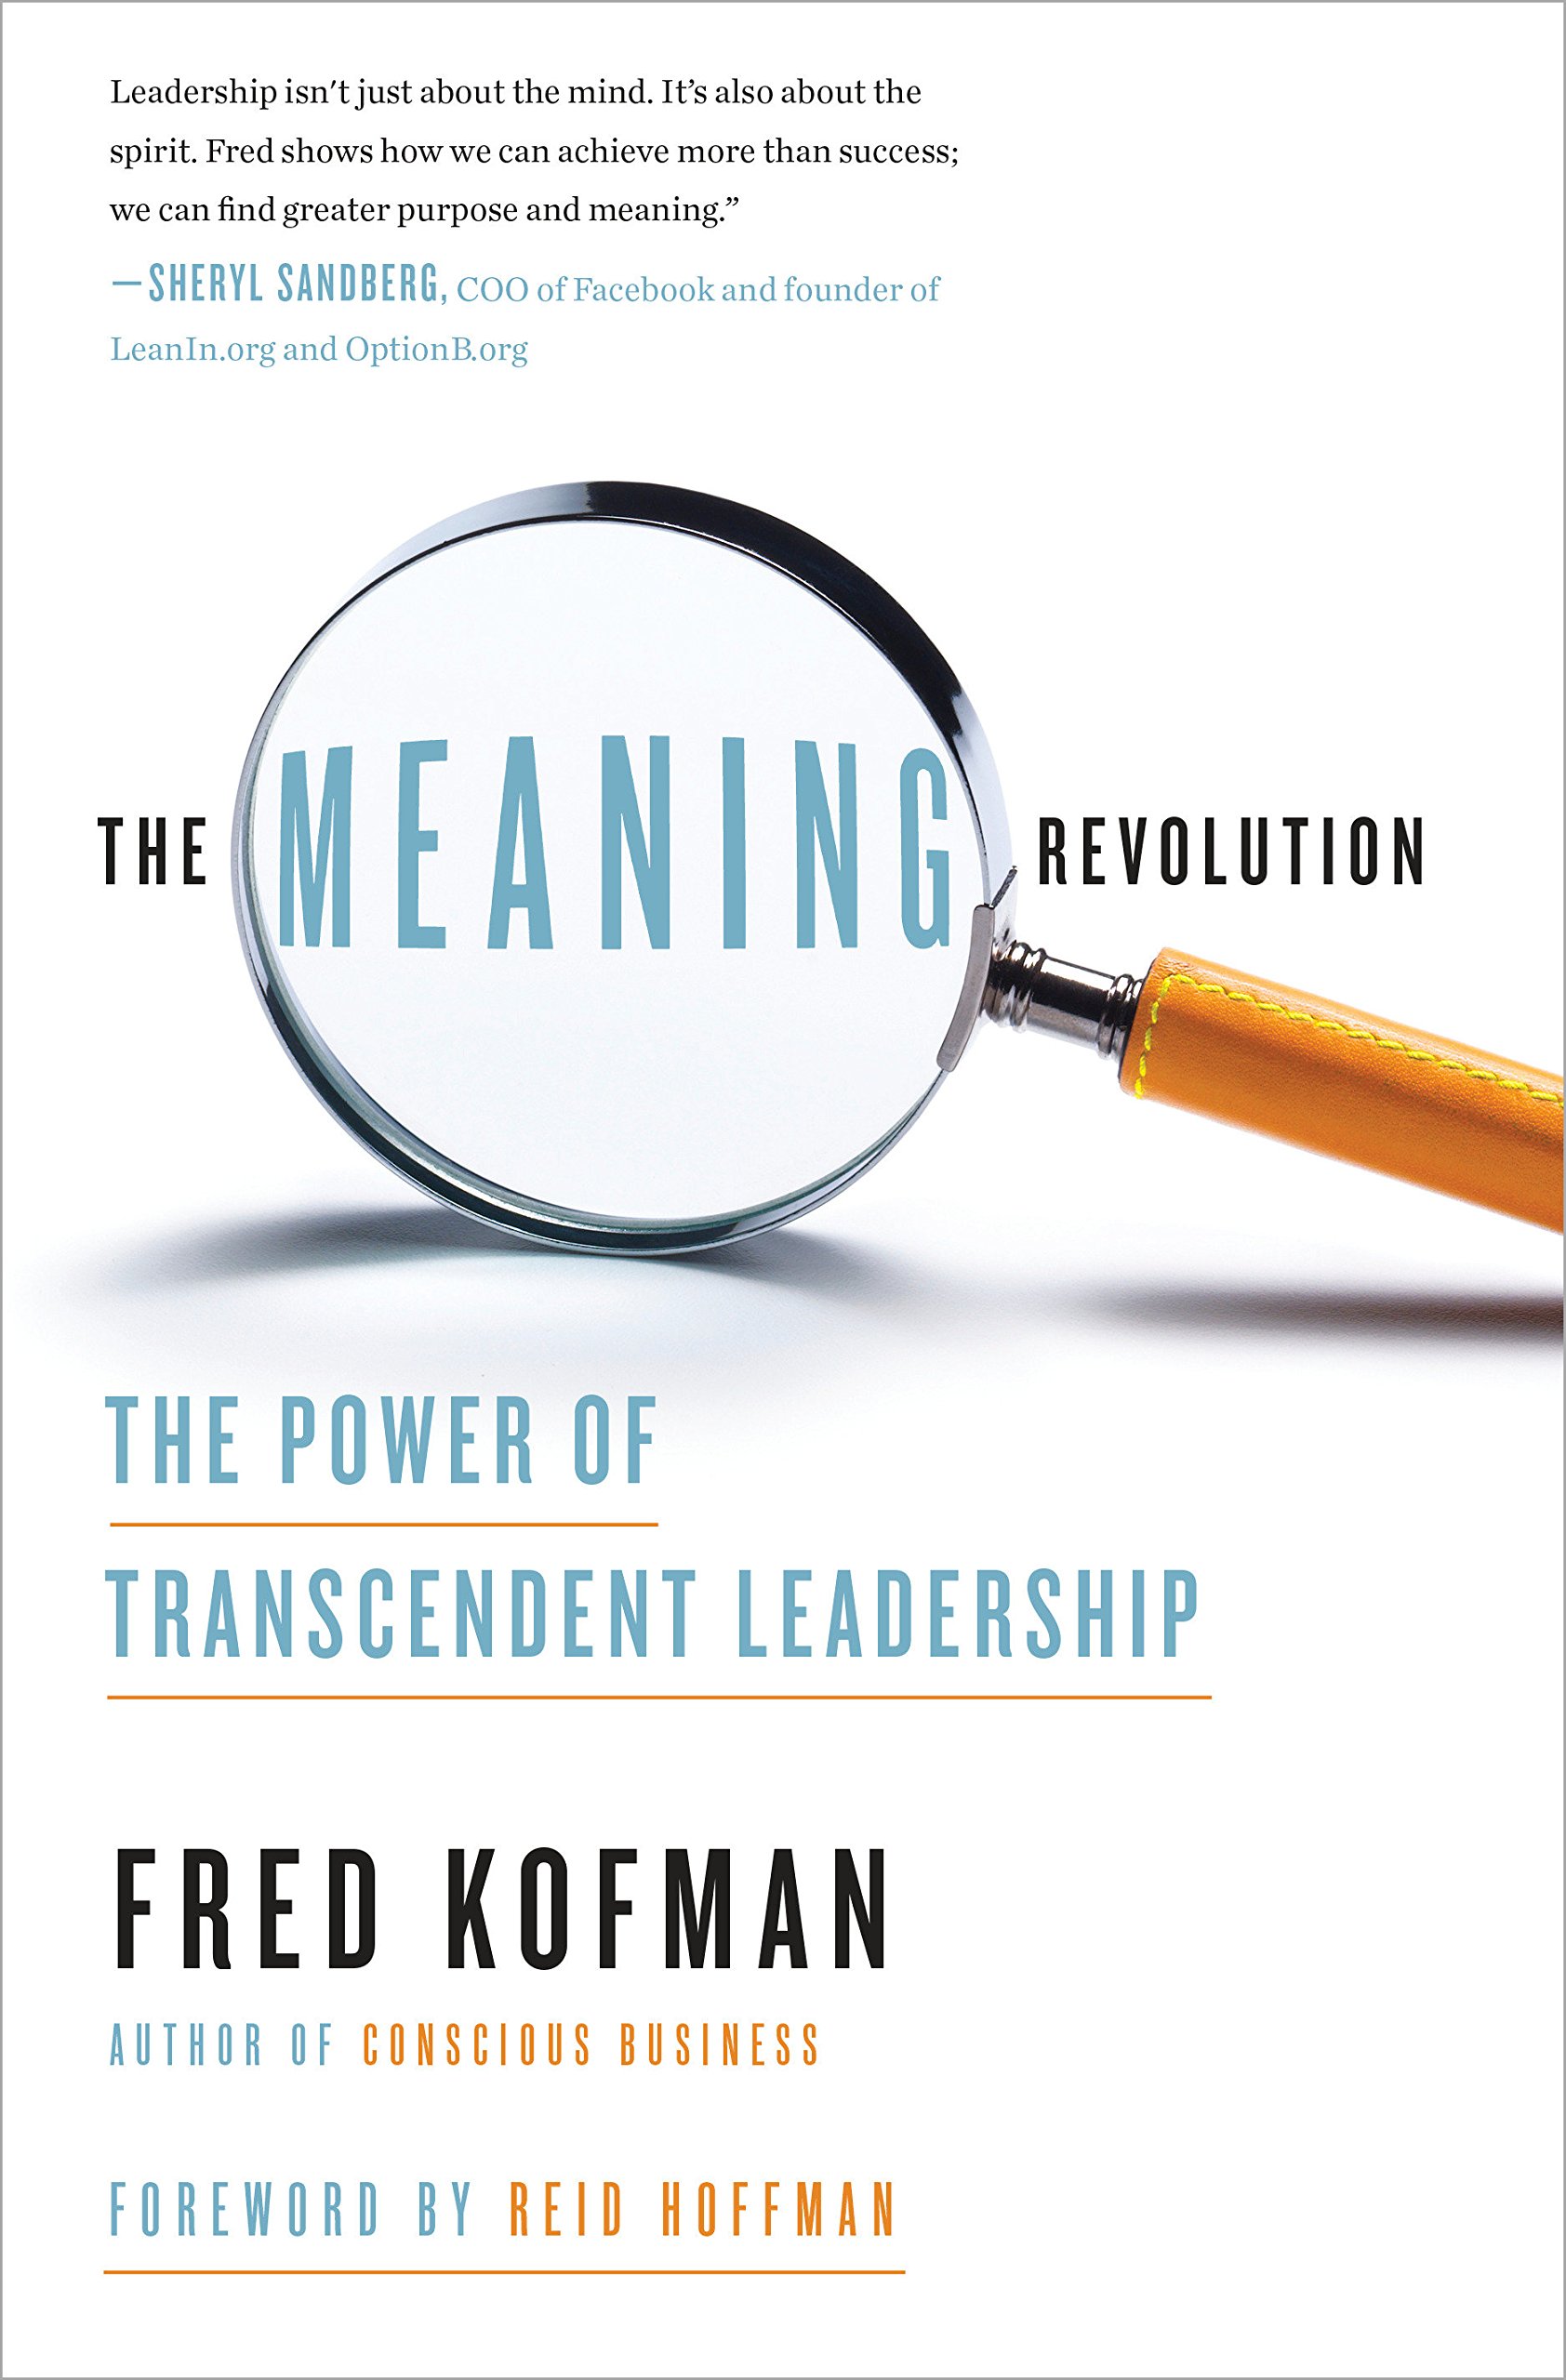 Kofman book cover